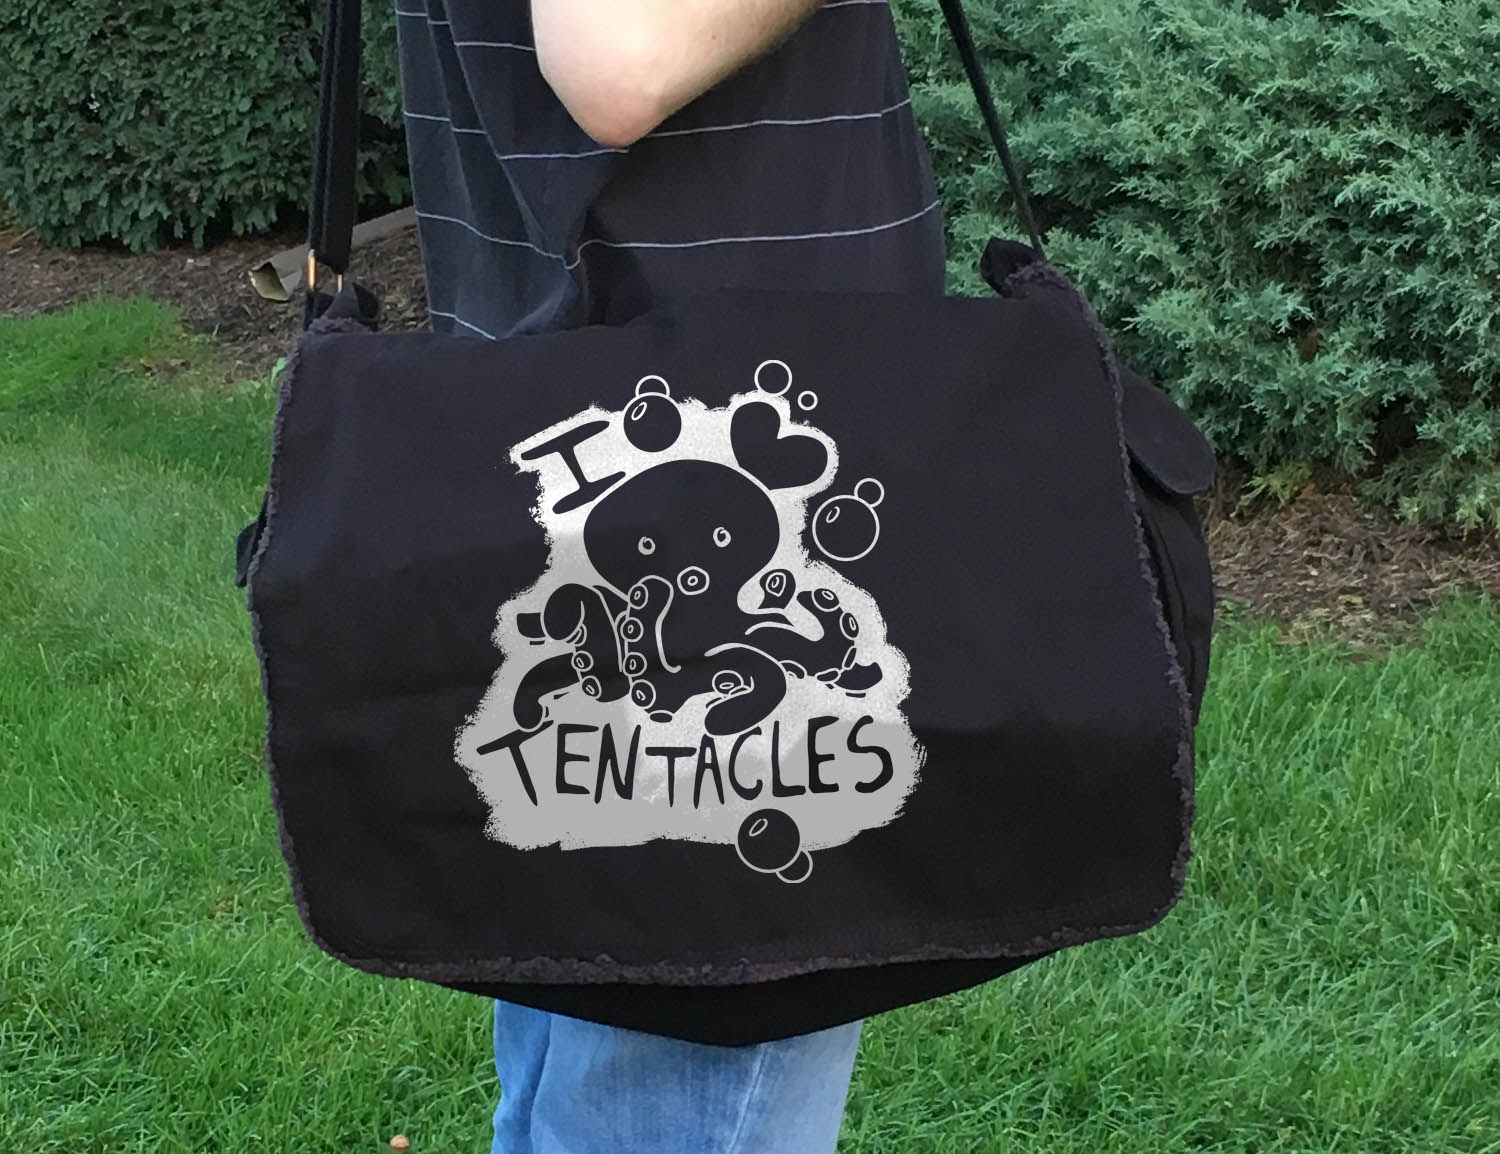 I Love Tentacles Messenger Bag -